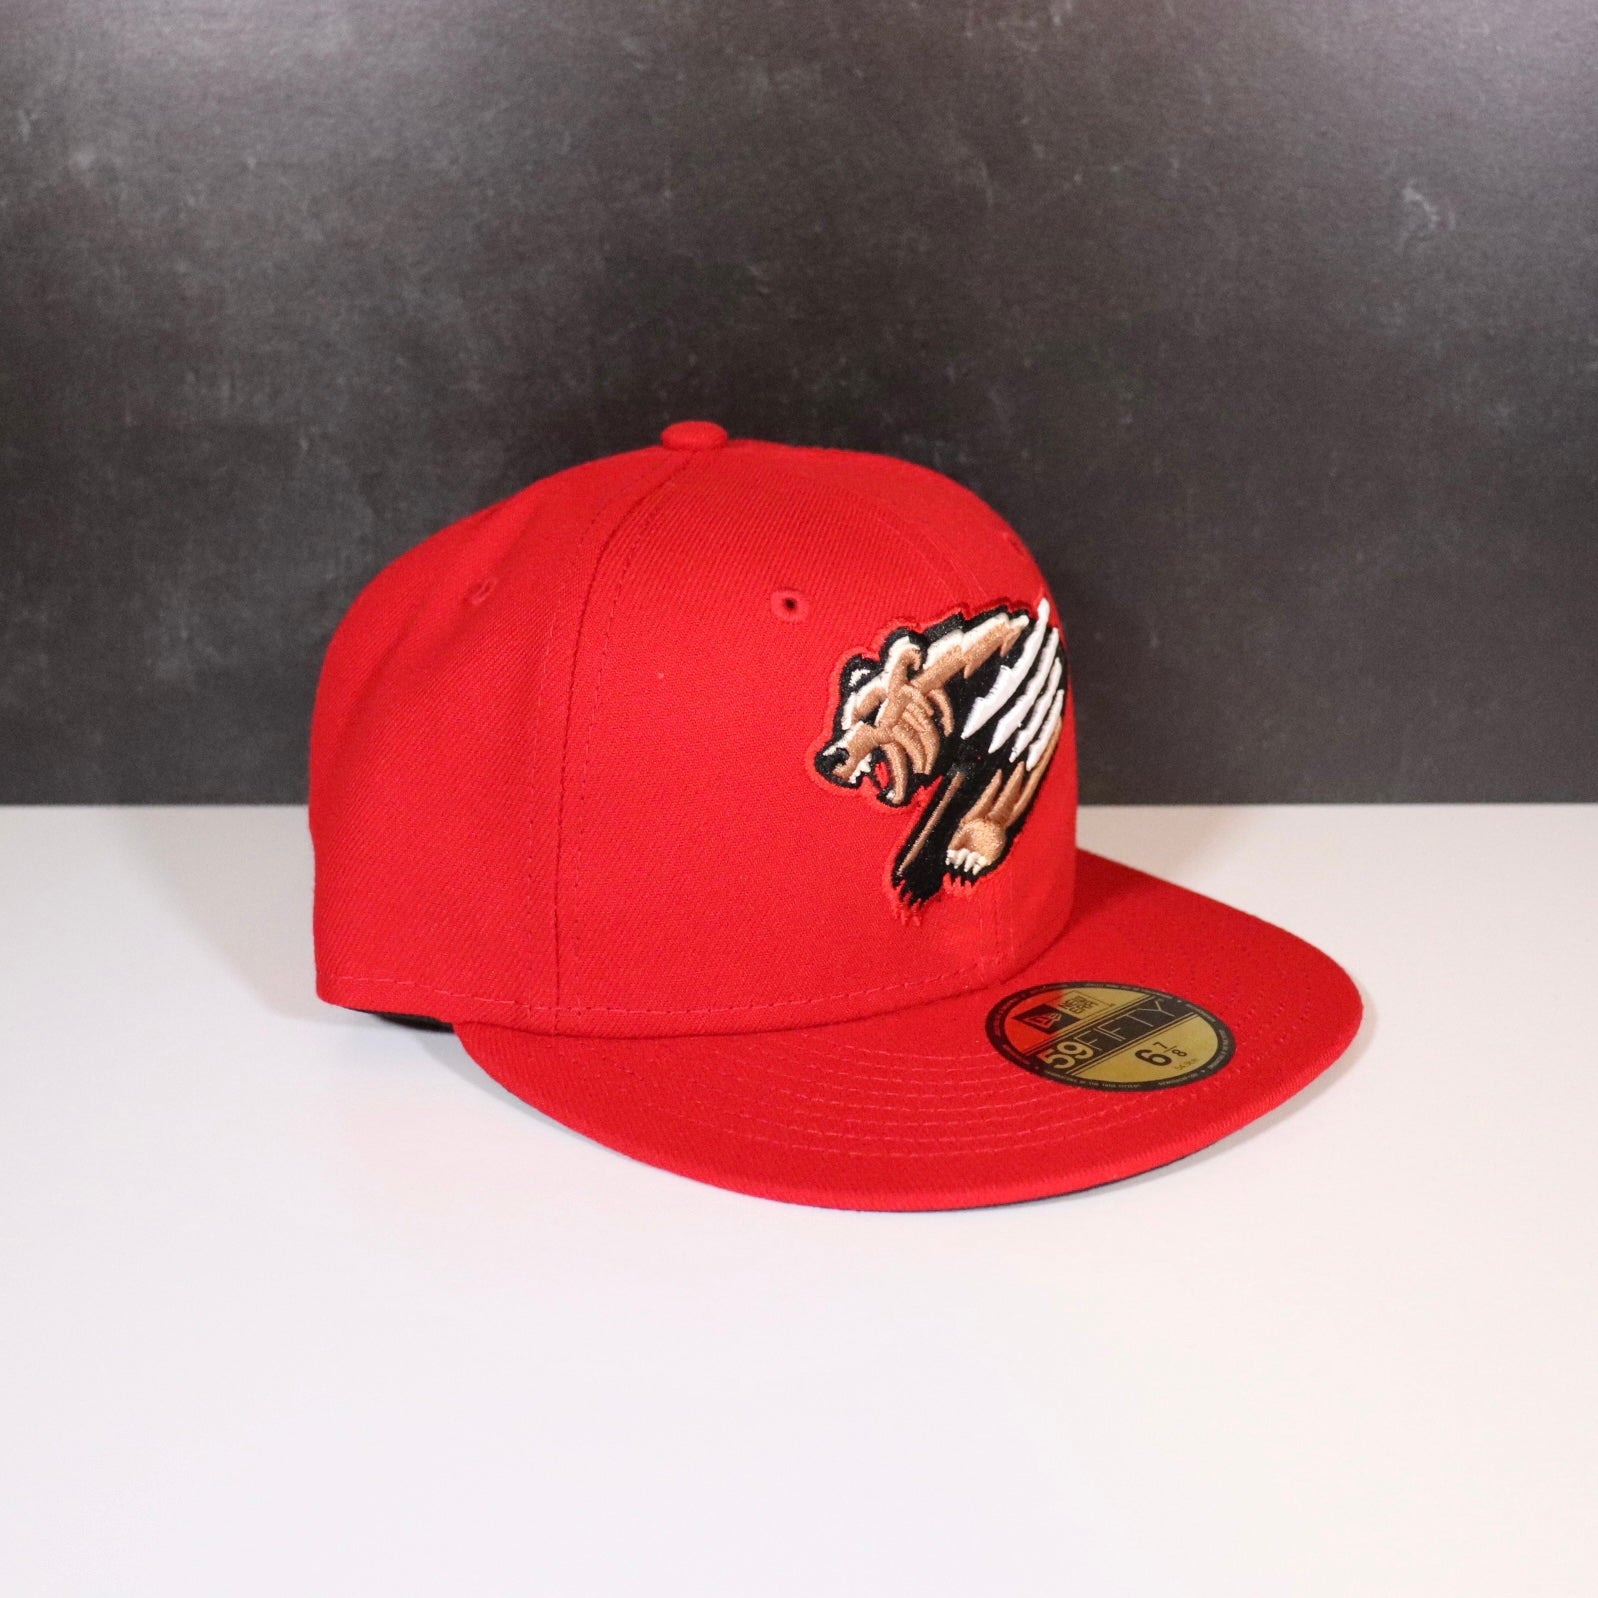 Official Fresno Grizzlies Hats, Grizzlies Cap, Grizzlies Hats, Beanies